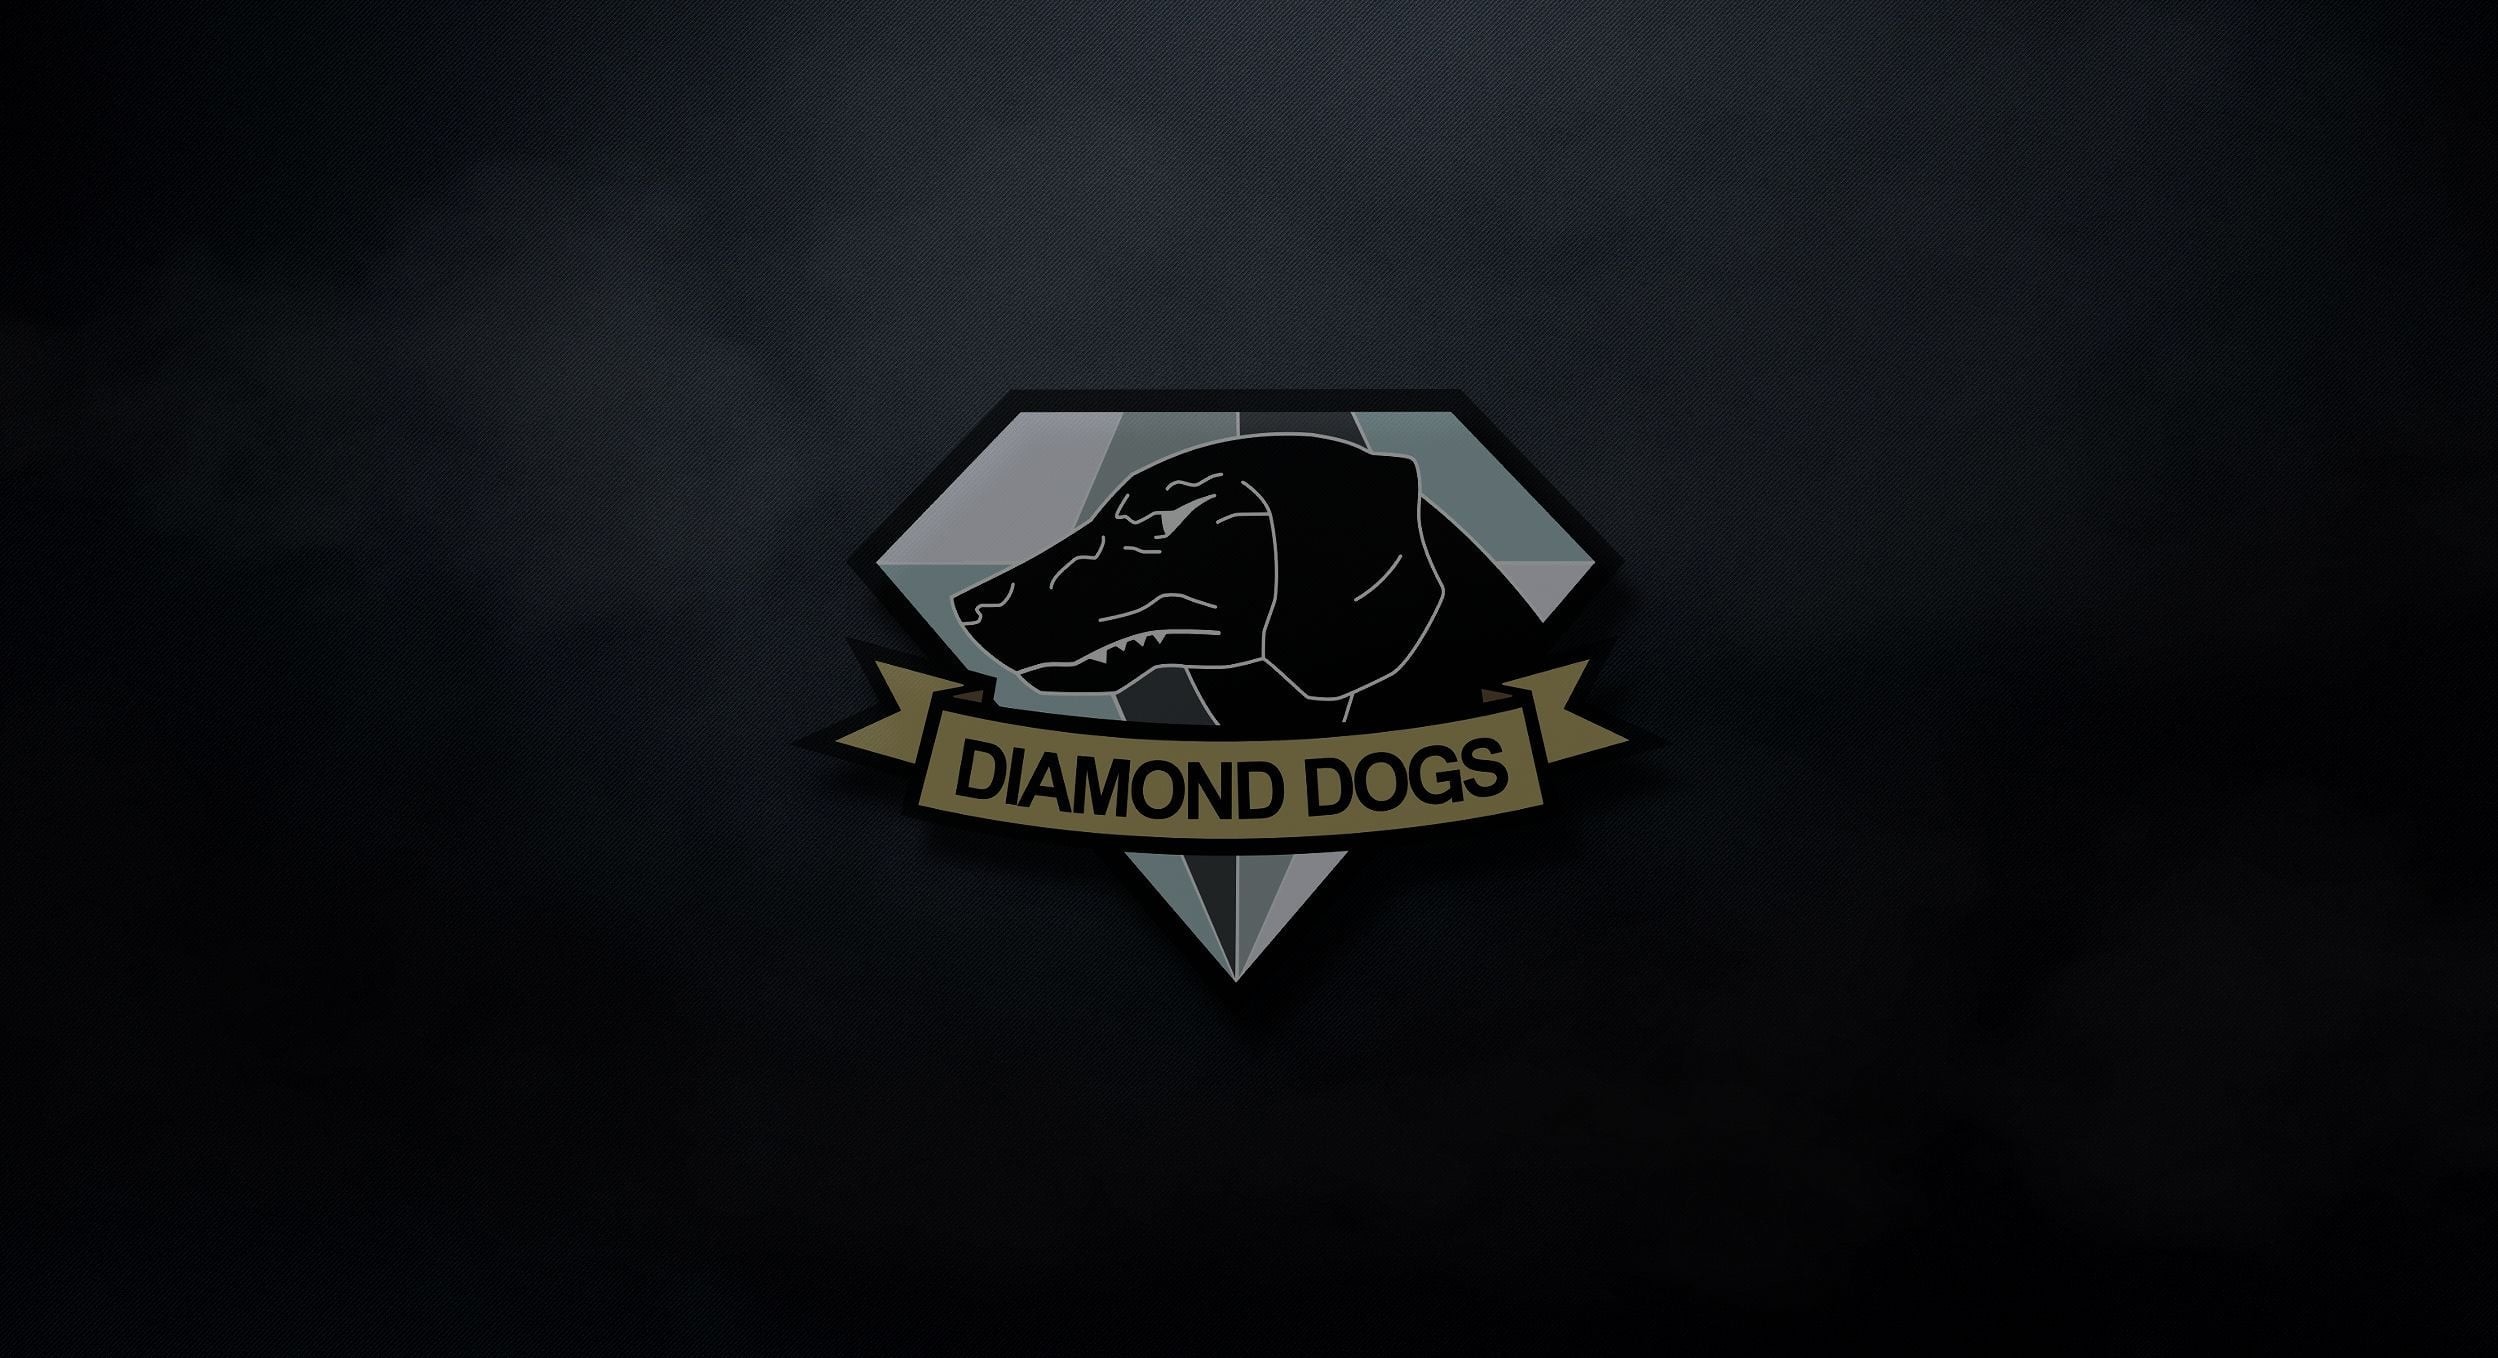 Metal Gear Solid 5 The Phantom Pain diamond dogs logo